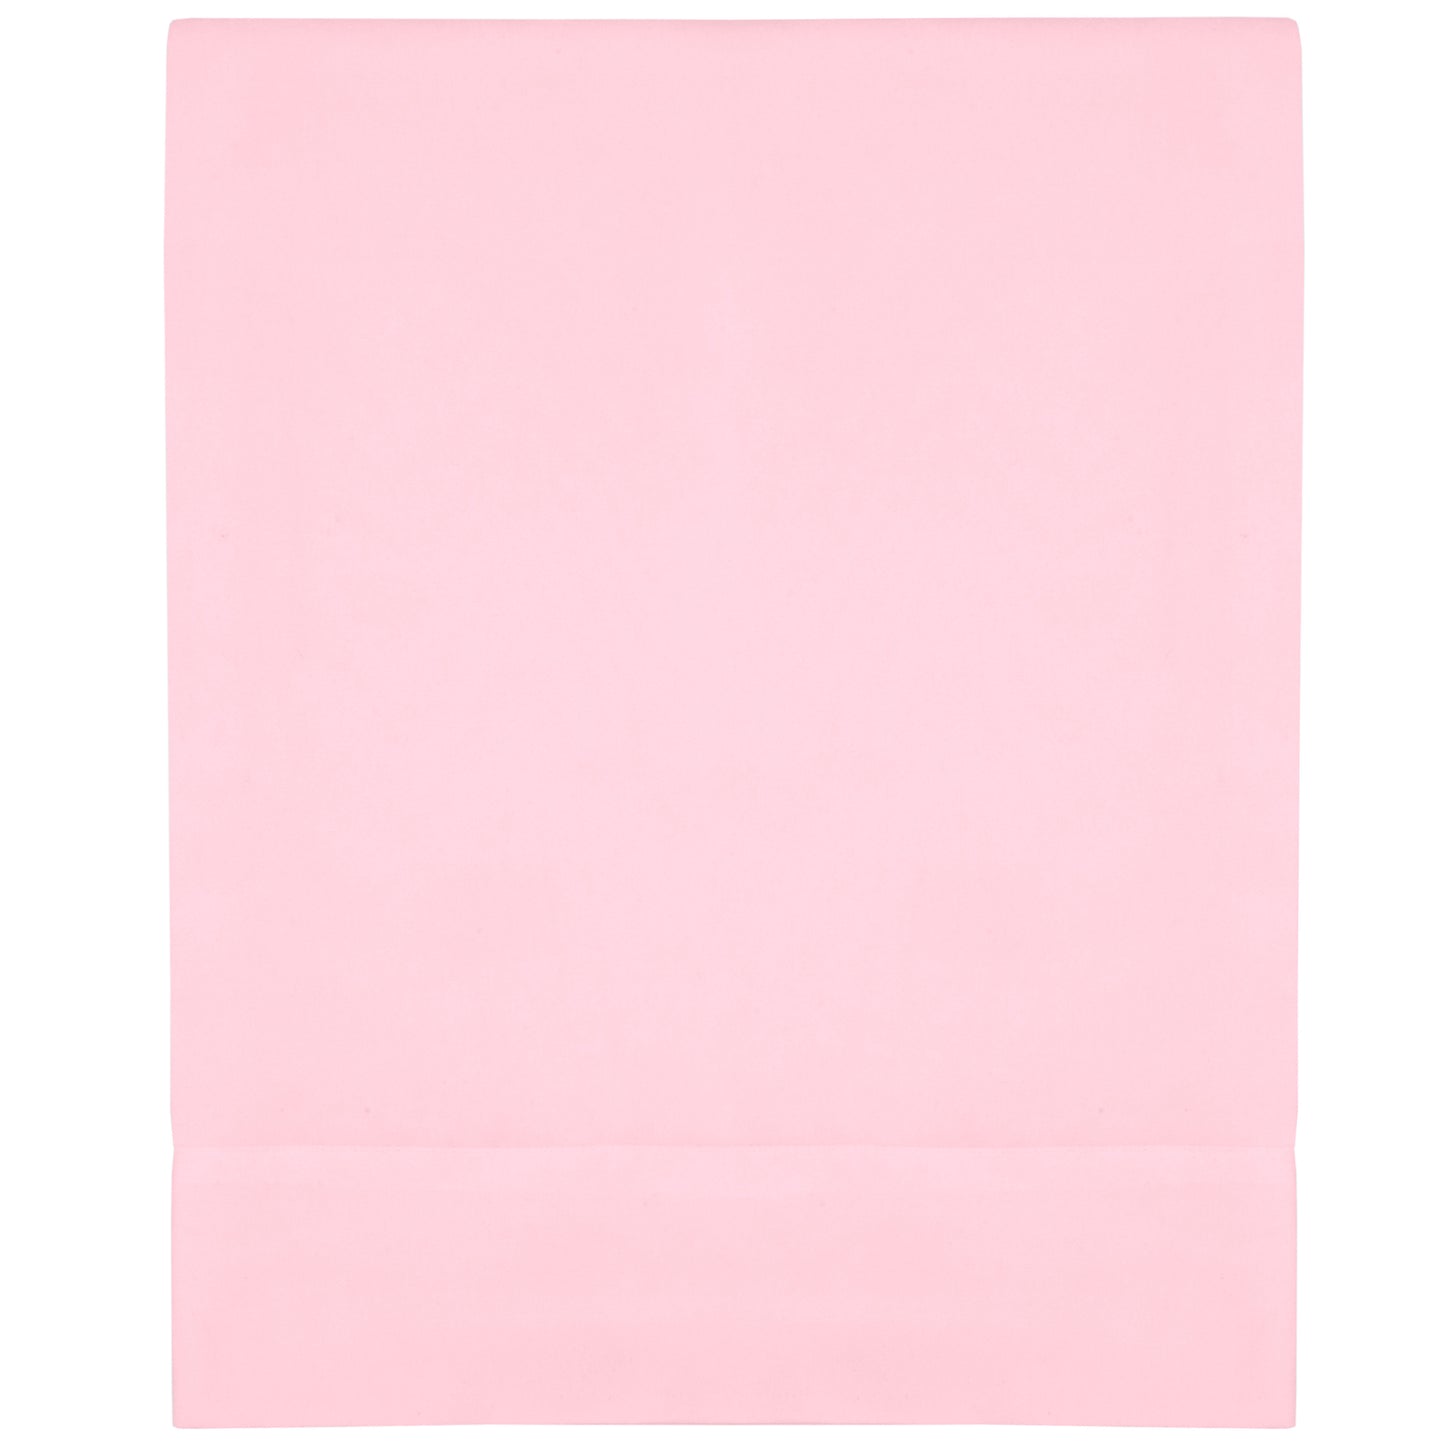 Everything Kids Pink and Mint Llama 4 Piece Toddler Bed Set - Comforter, Fitted Bottom Sheet, Flat Top Sheet, Reversible Pillowcase